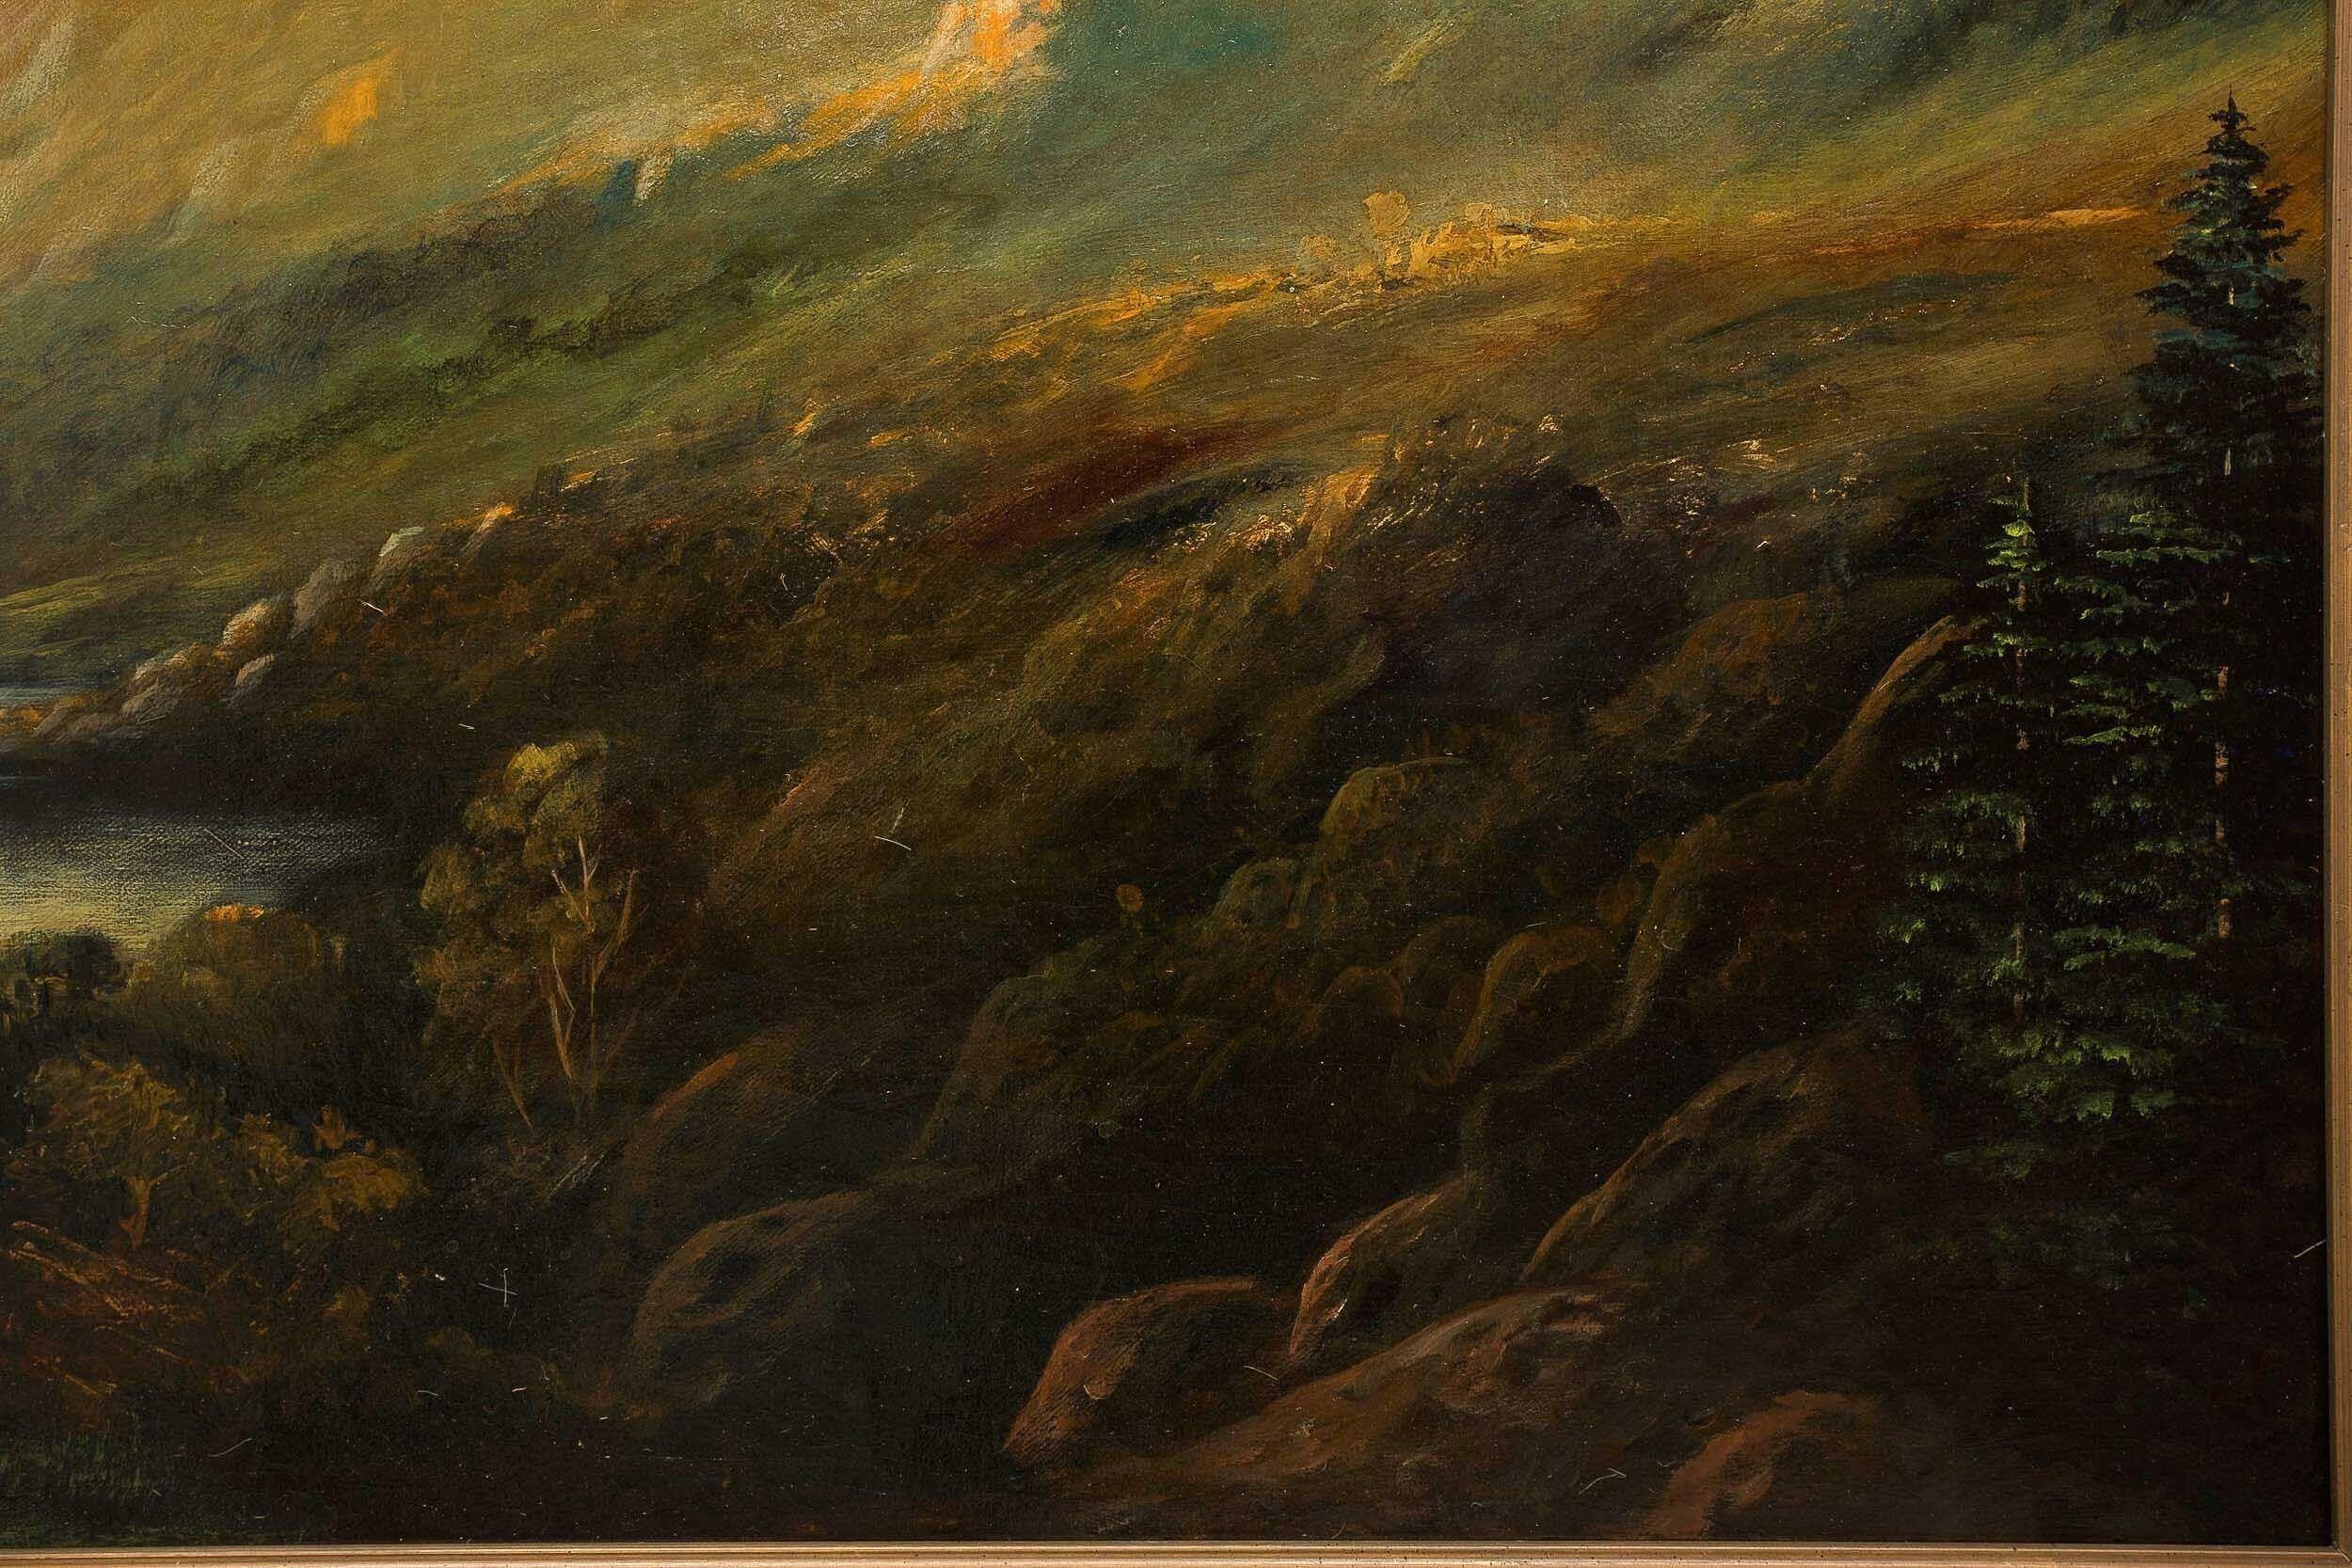 Canvas American Antique Landscape Painting of a Mountain Range by James Hamilton